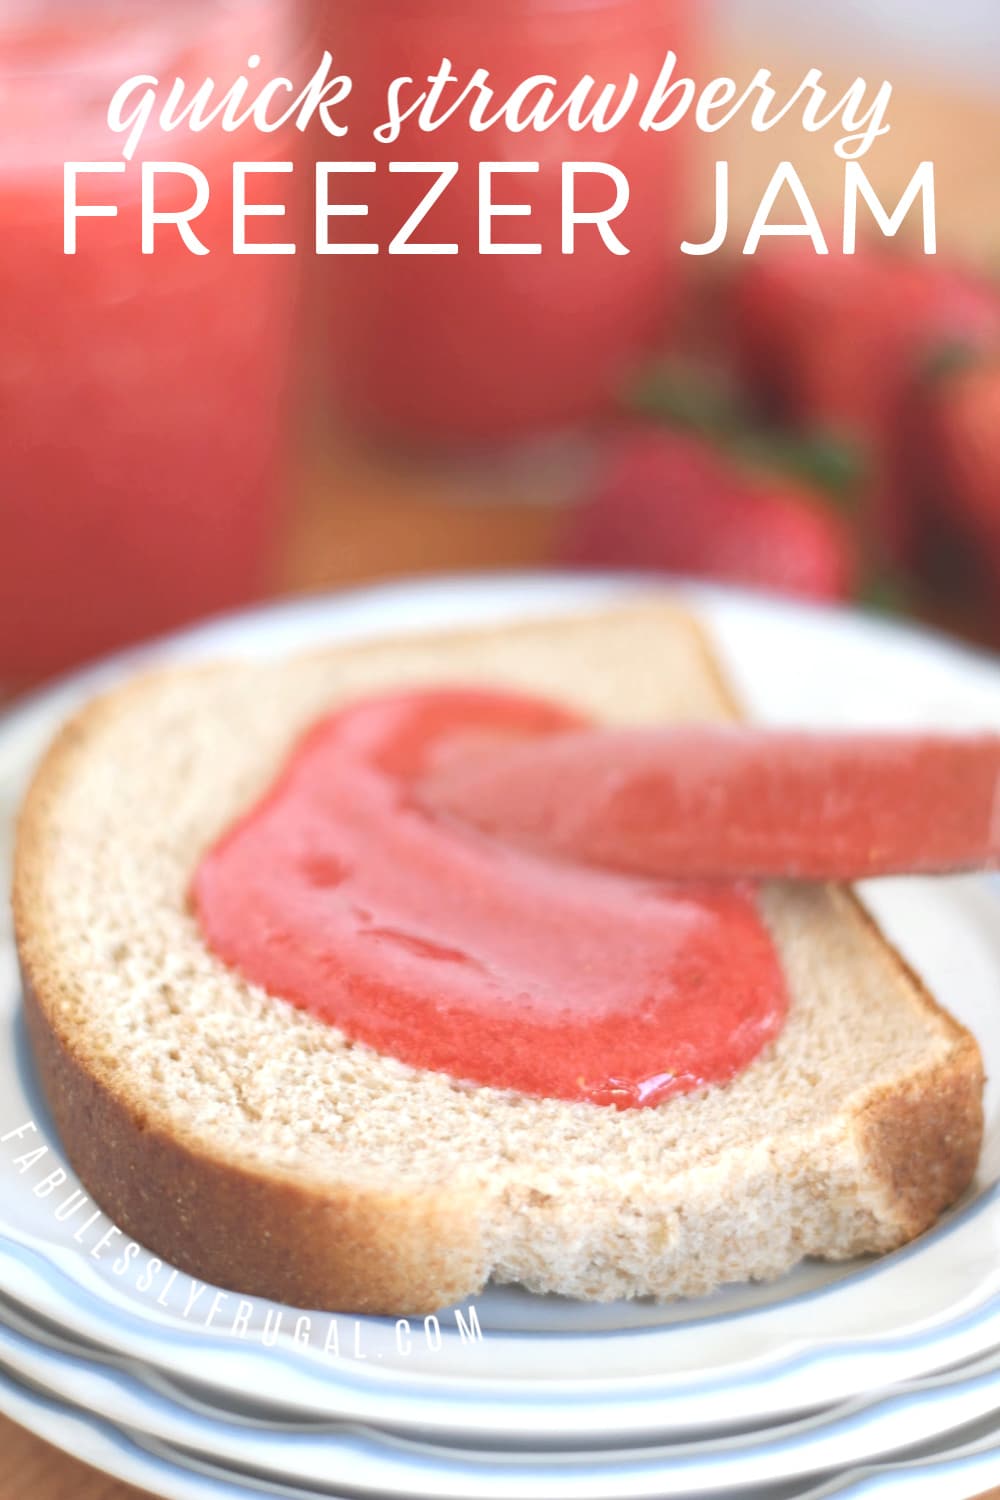 Quick strawberry freezer jam recipe